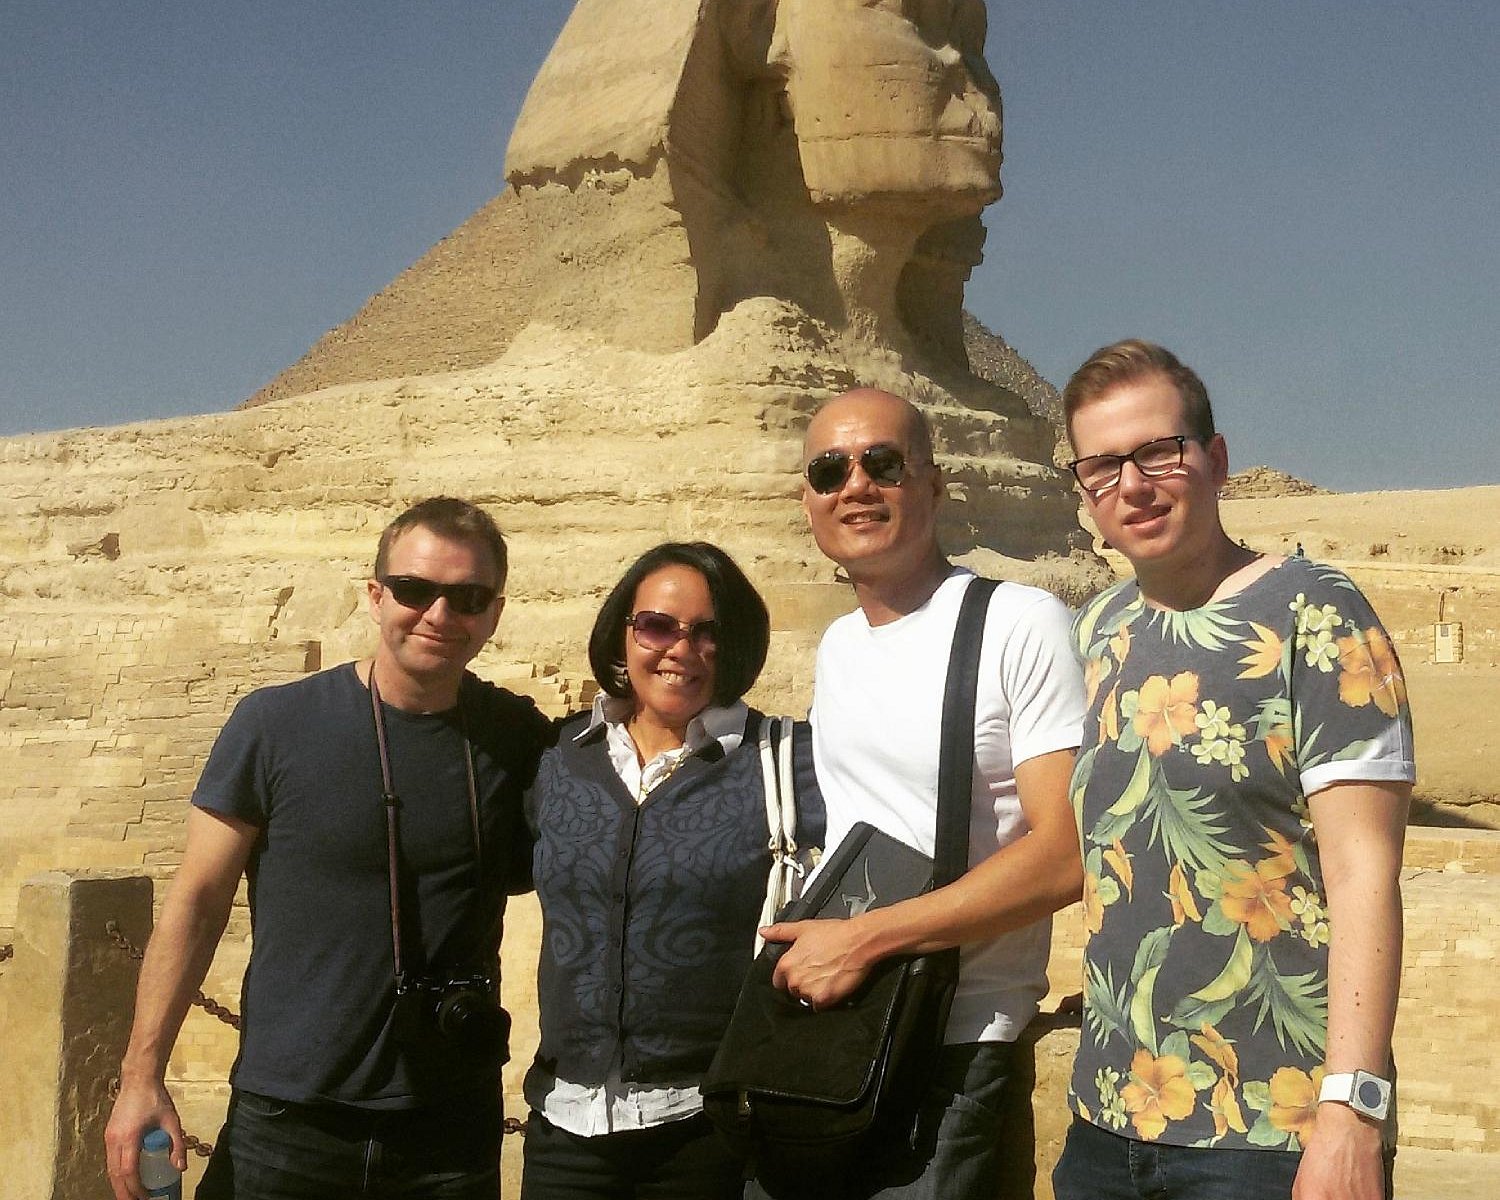 gateway tours egypt